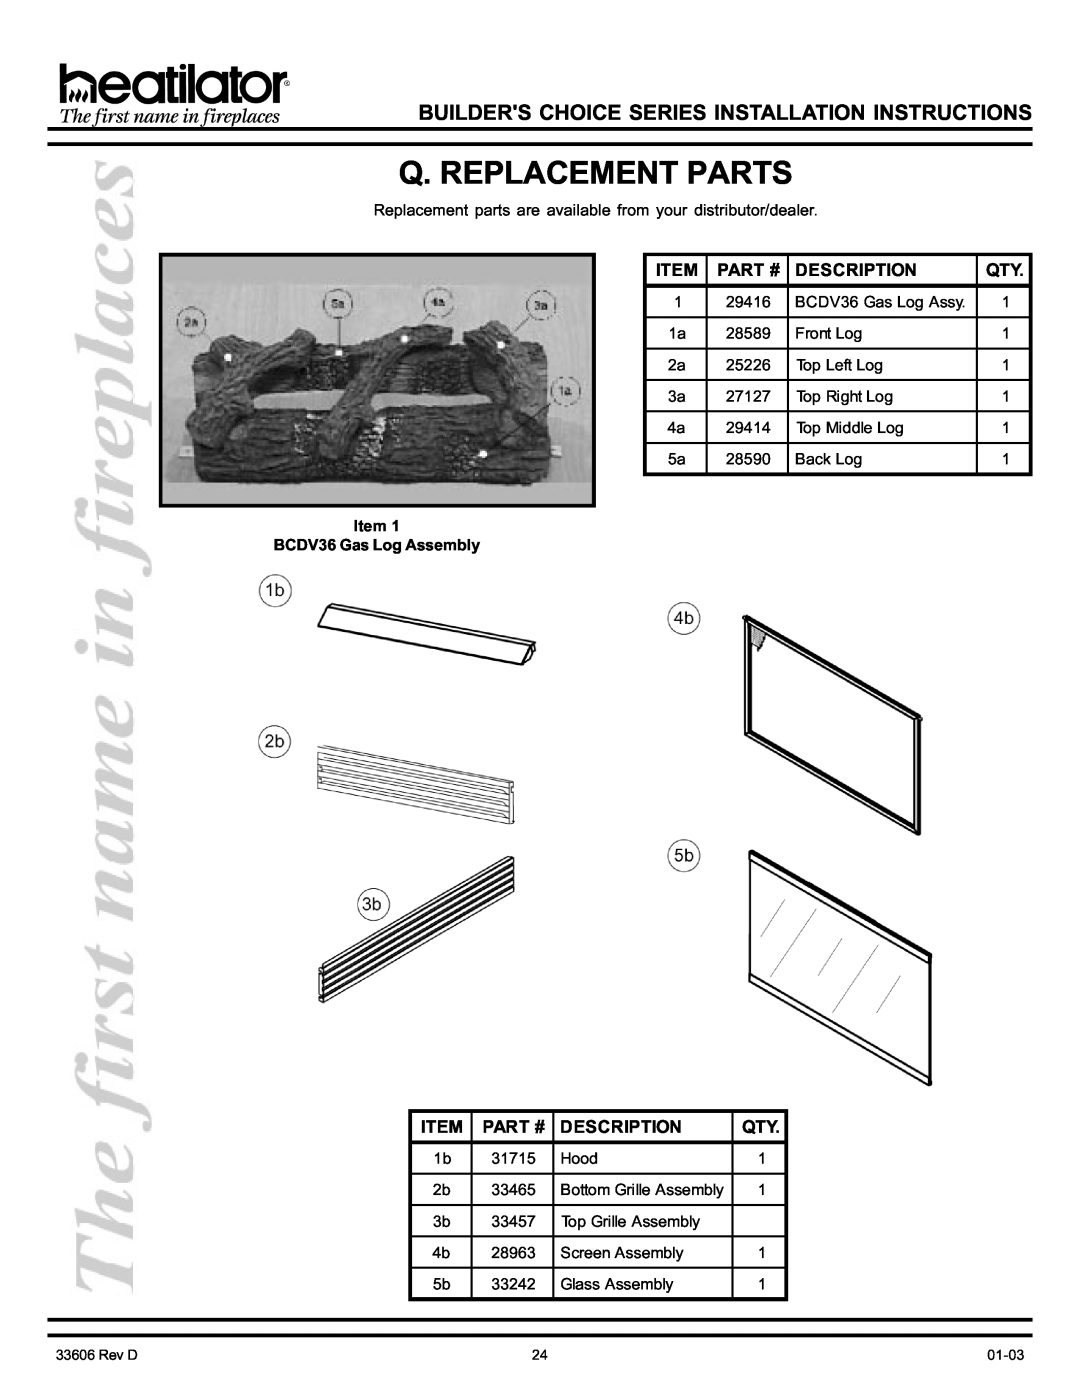 Heatiator manual Q. Replacement Parts, Part #, Description, Item BCDV36 Gas Log Assembly 